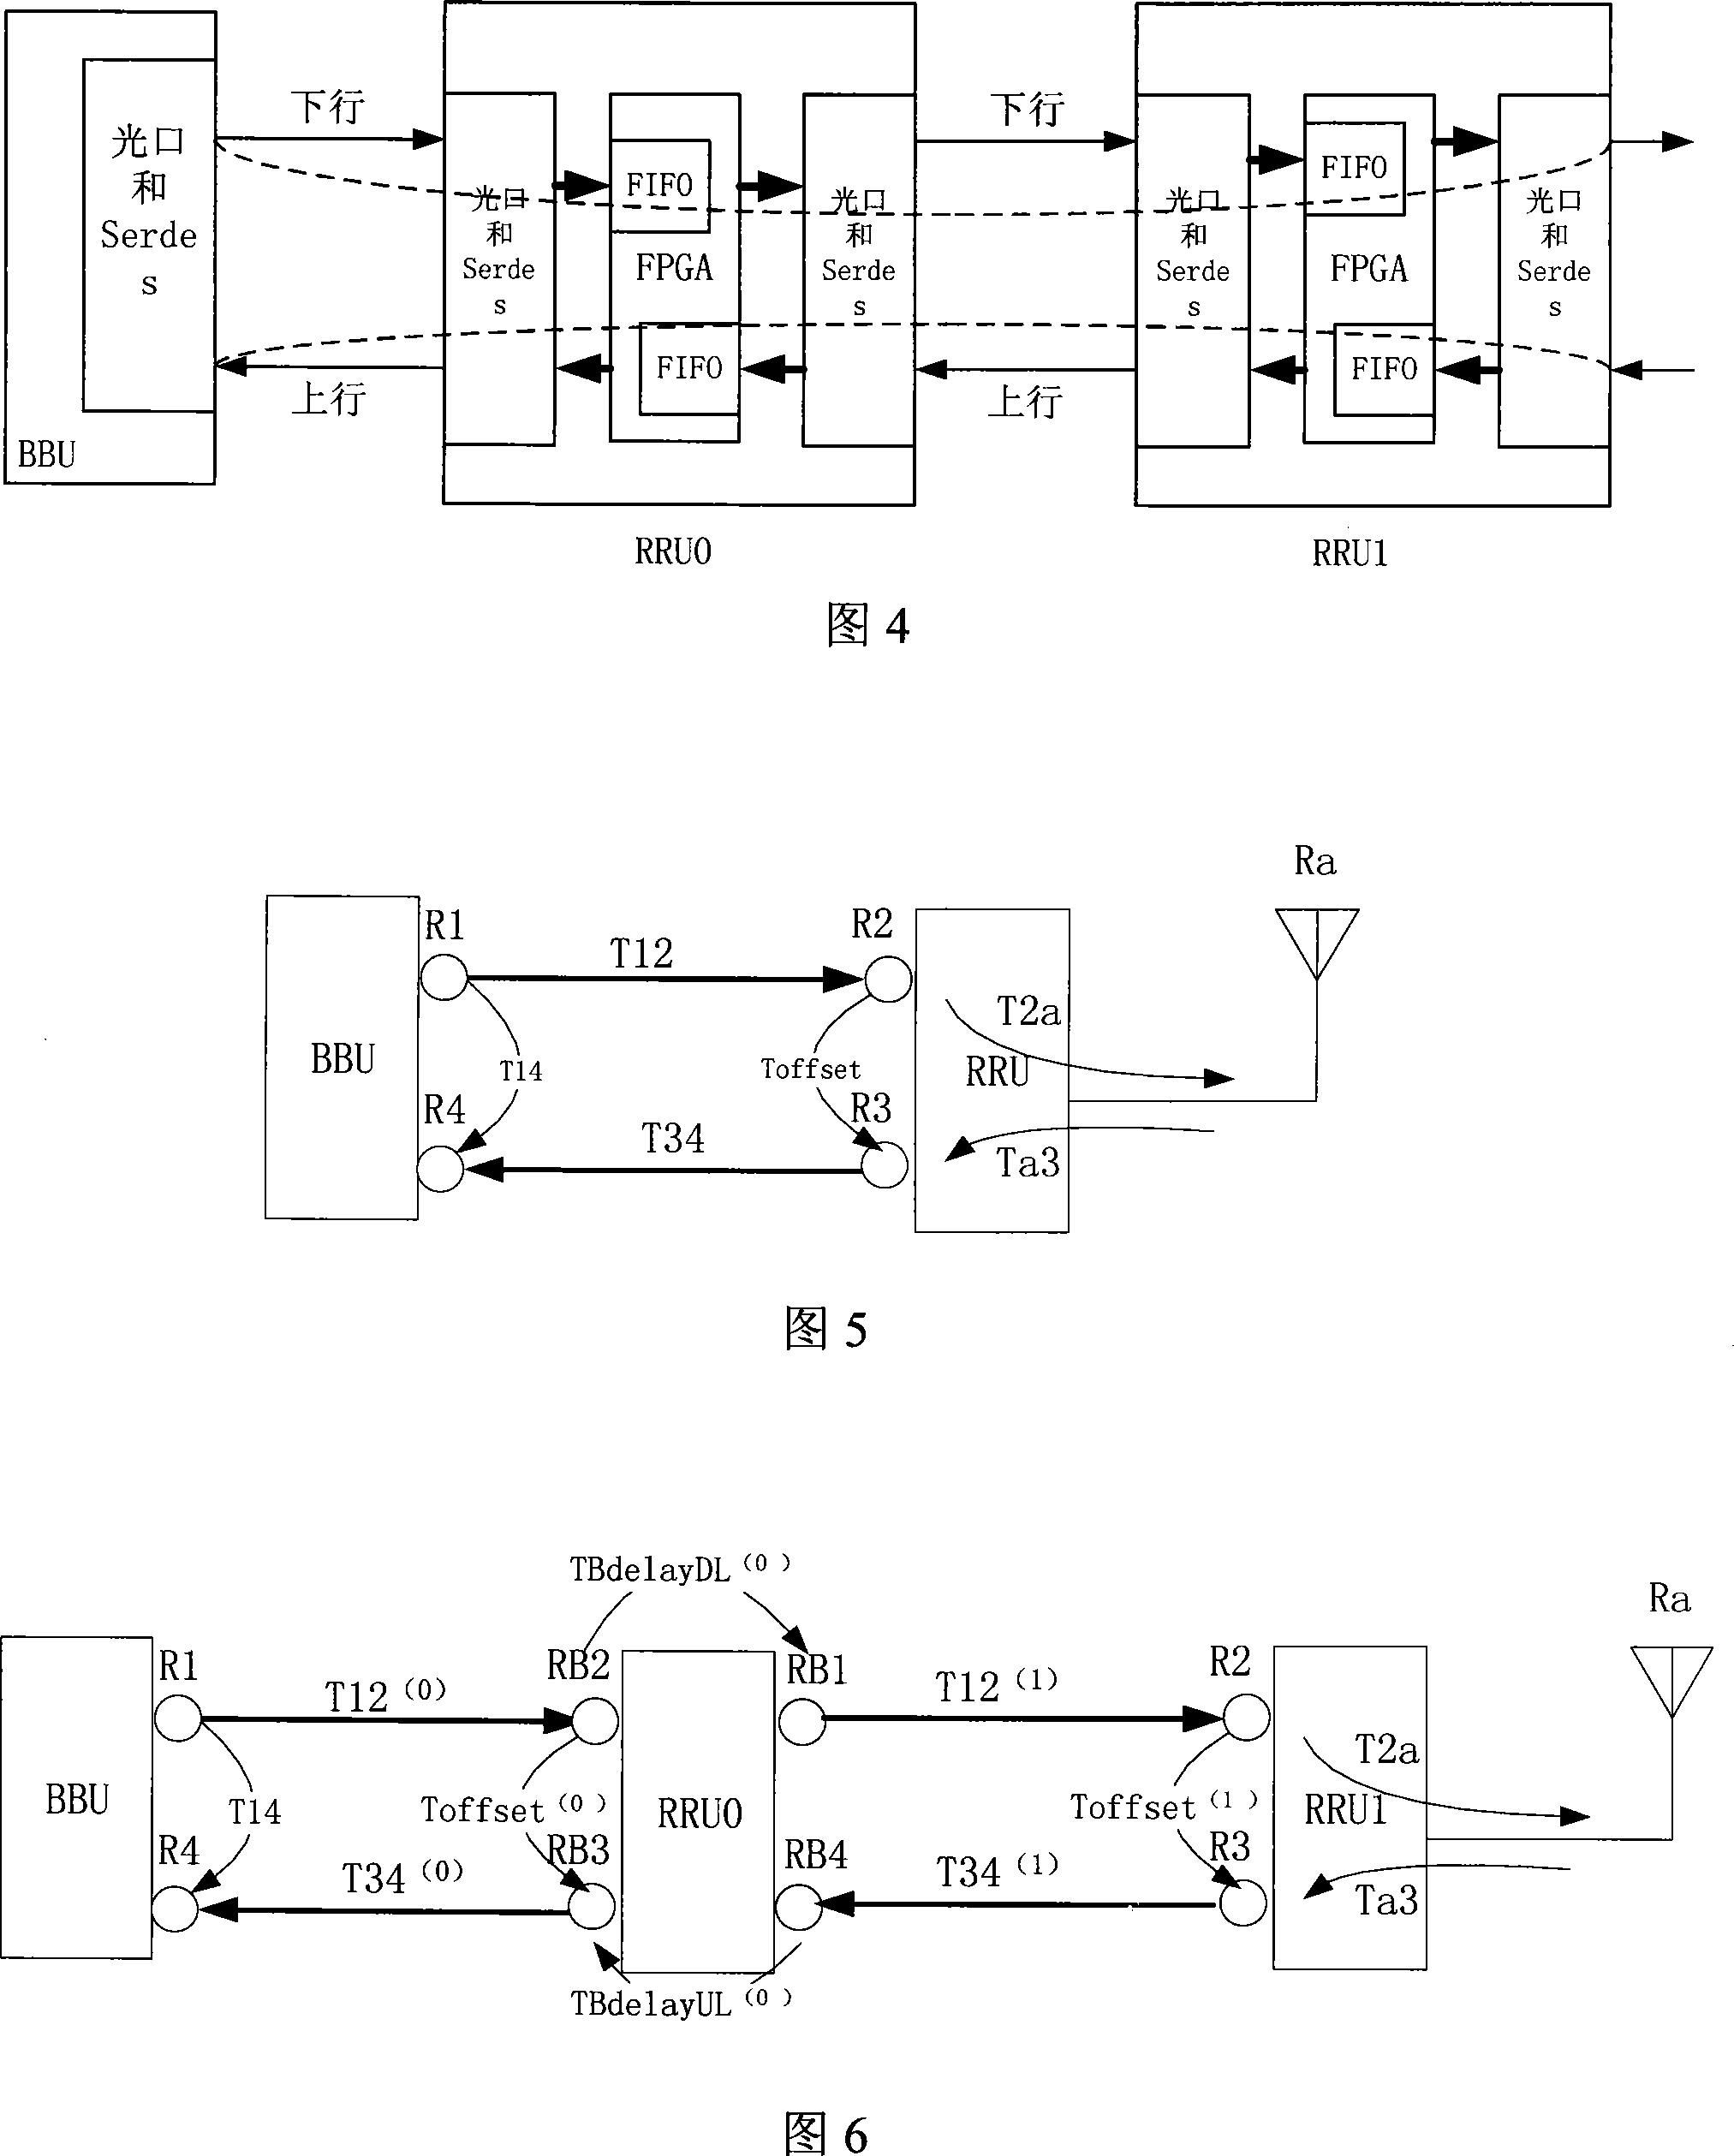 An uplink data transmission method for cascaded RF remote unit